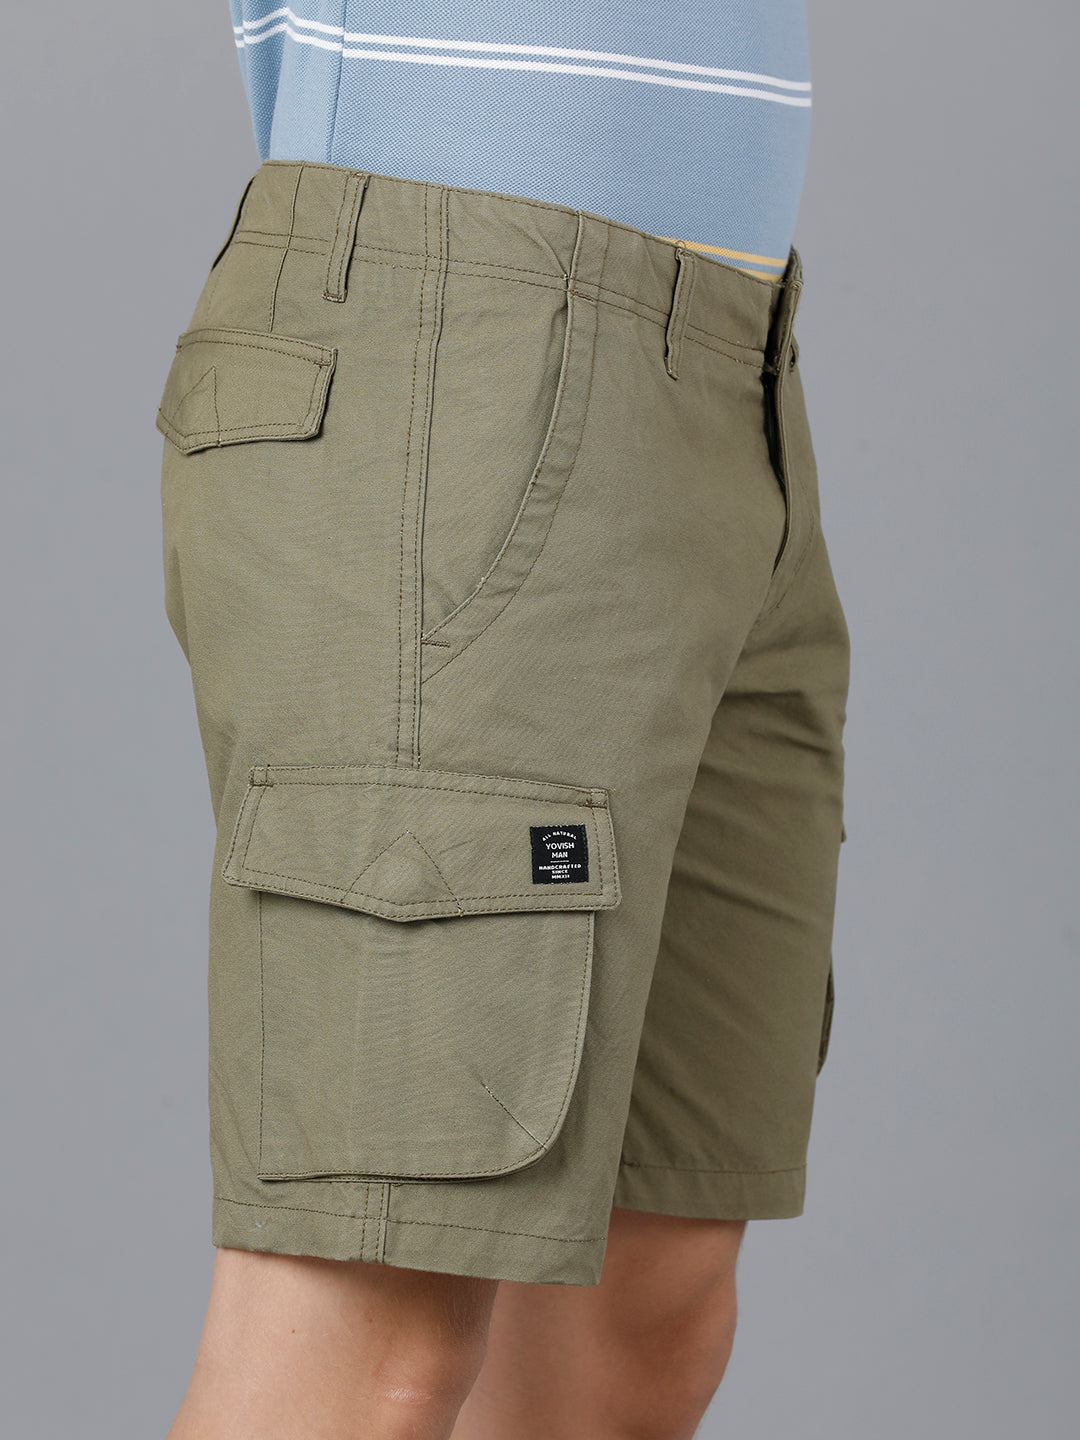 Cargo pants shorts